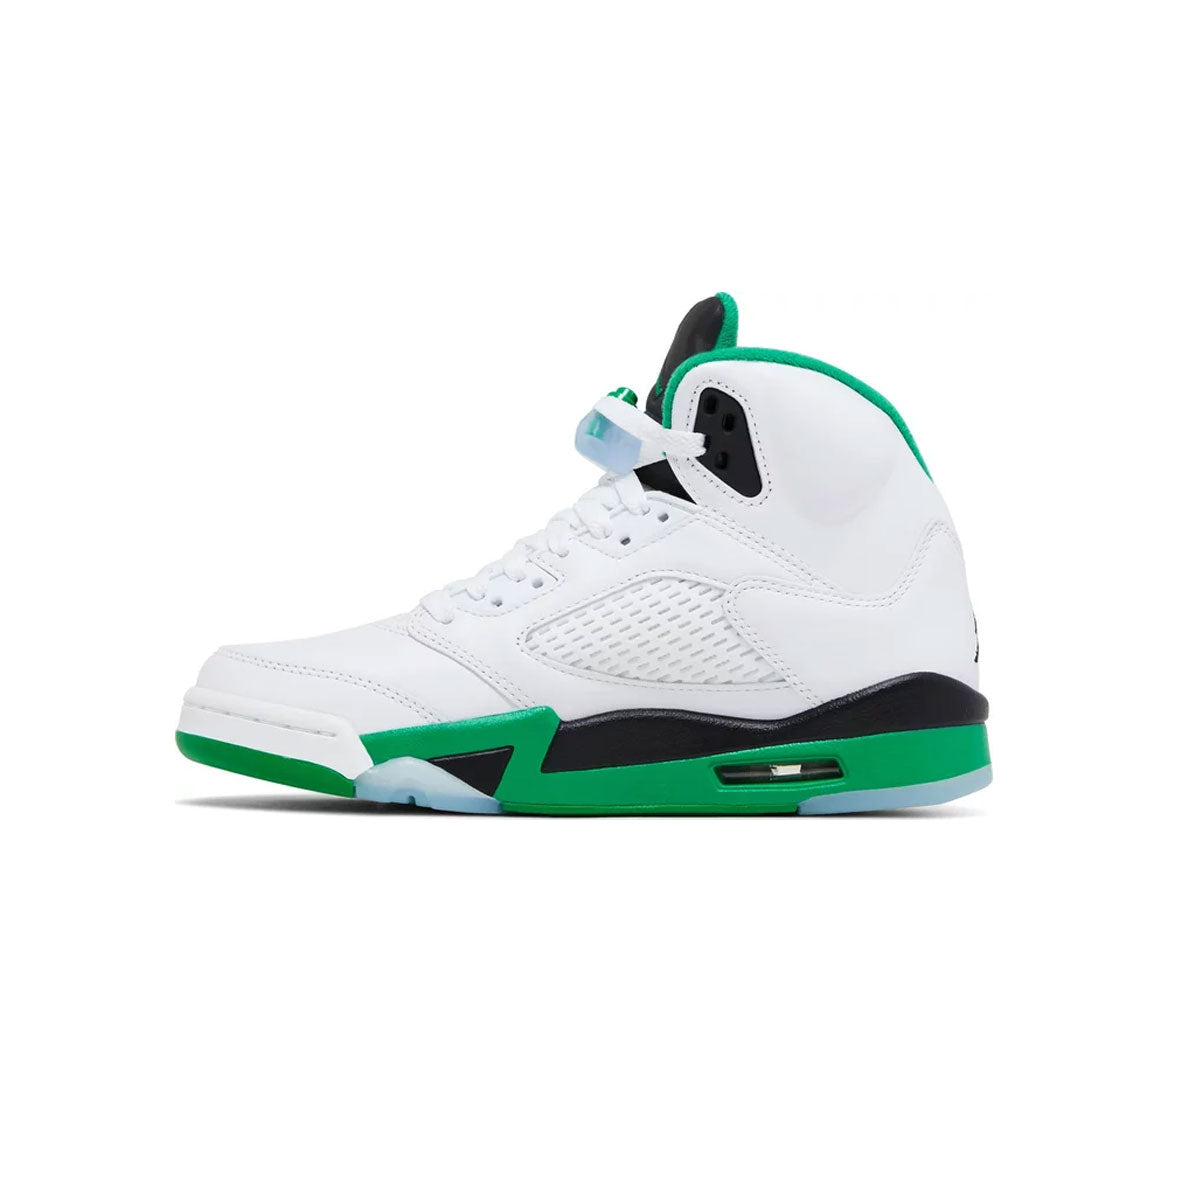 Air Jordan 5 Retro "Lucky Green" Women's